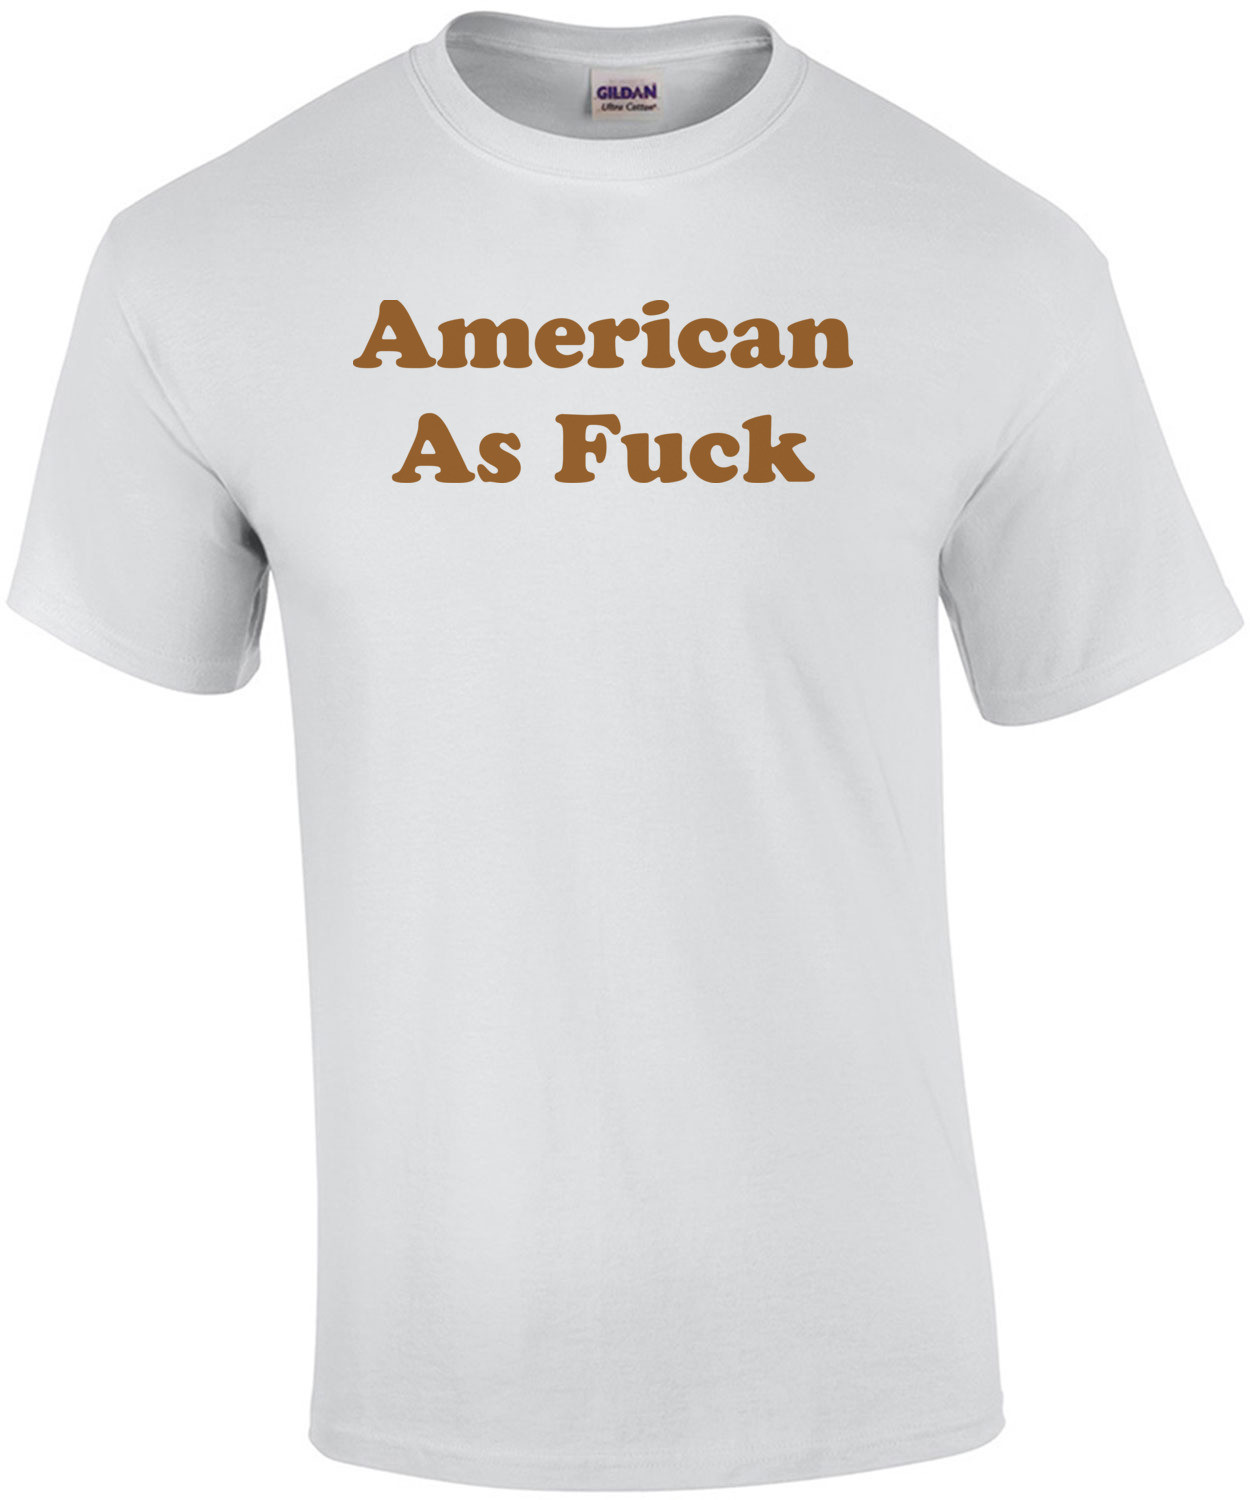 American As Fuck Shirt